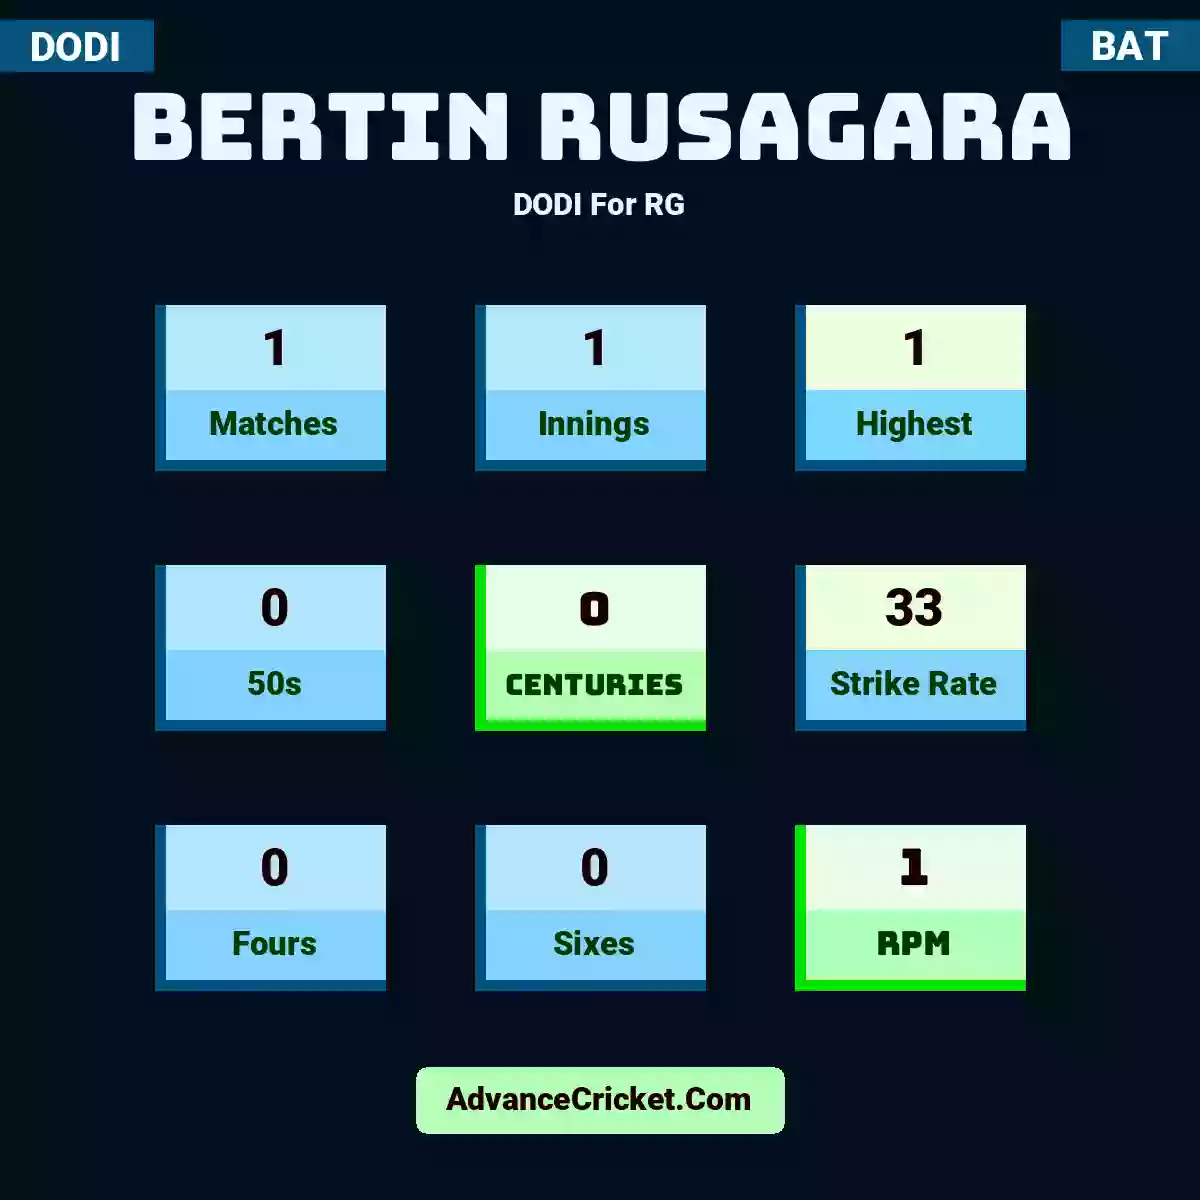 Bertin Rusagara DODI  For RG, Bertin Rusagara played 1 matches, scored 1 runs as highest, 0 half-centuries, and 0 centuries, with a strike rate of 33. B.Rusagara hit 0 fours and 0 sixes, with an RPM of 1.